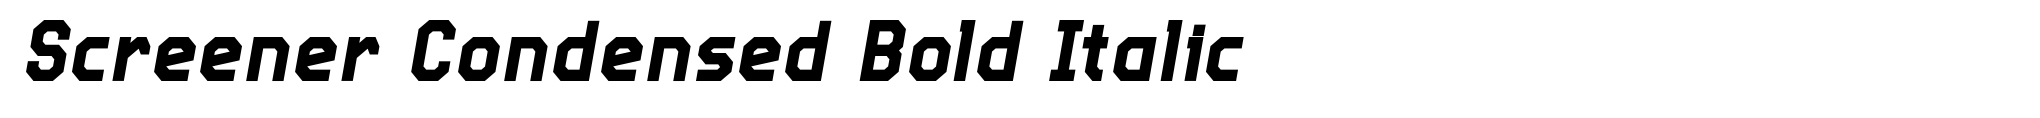 Screener Condensed Bold Italic image